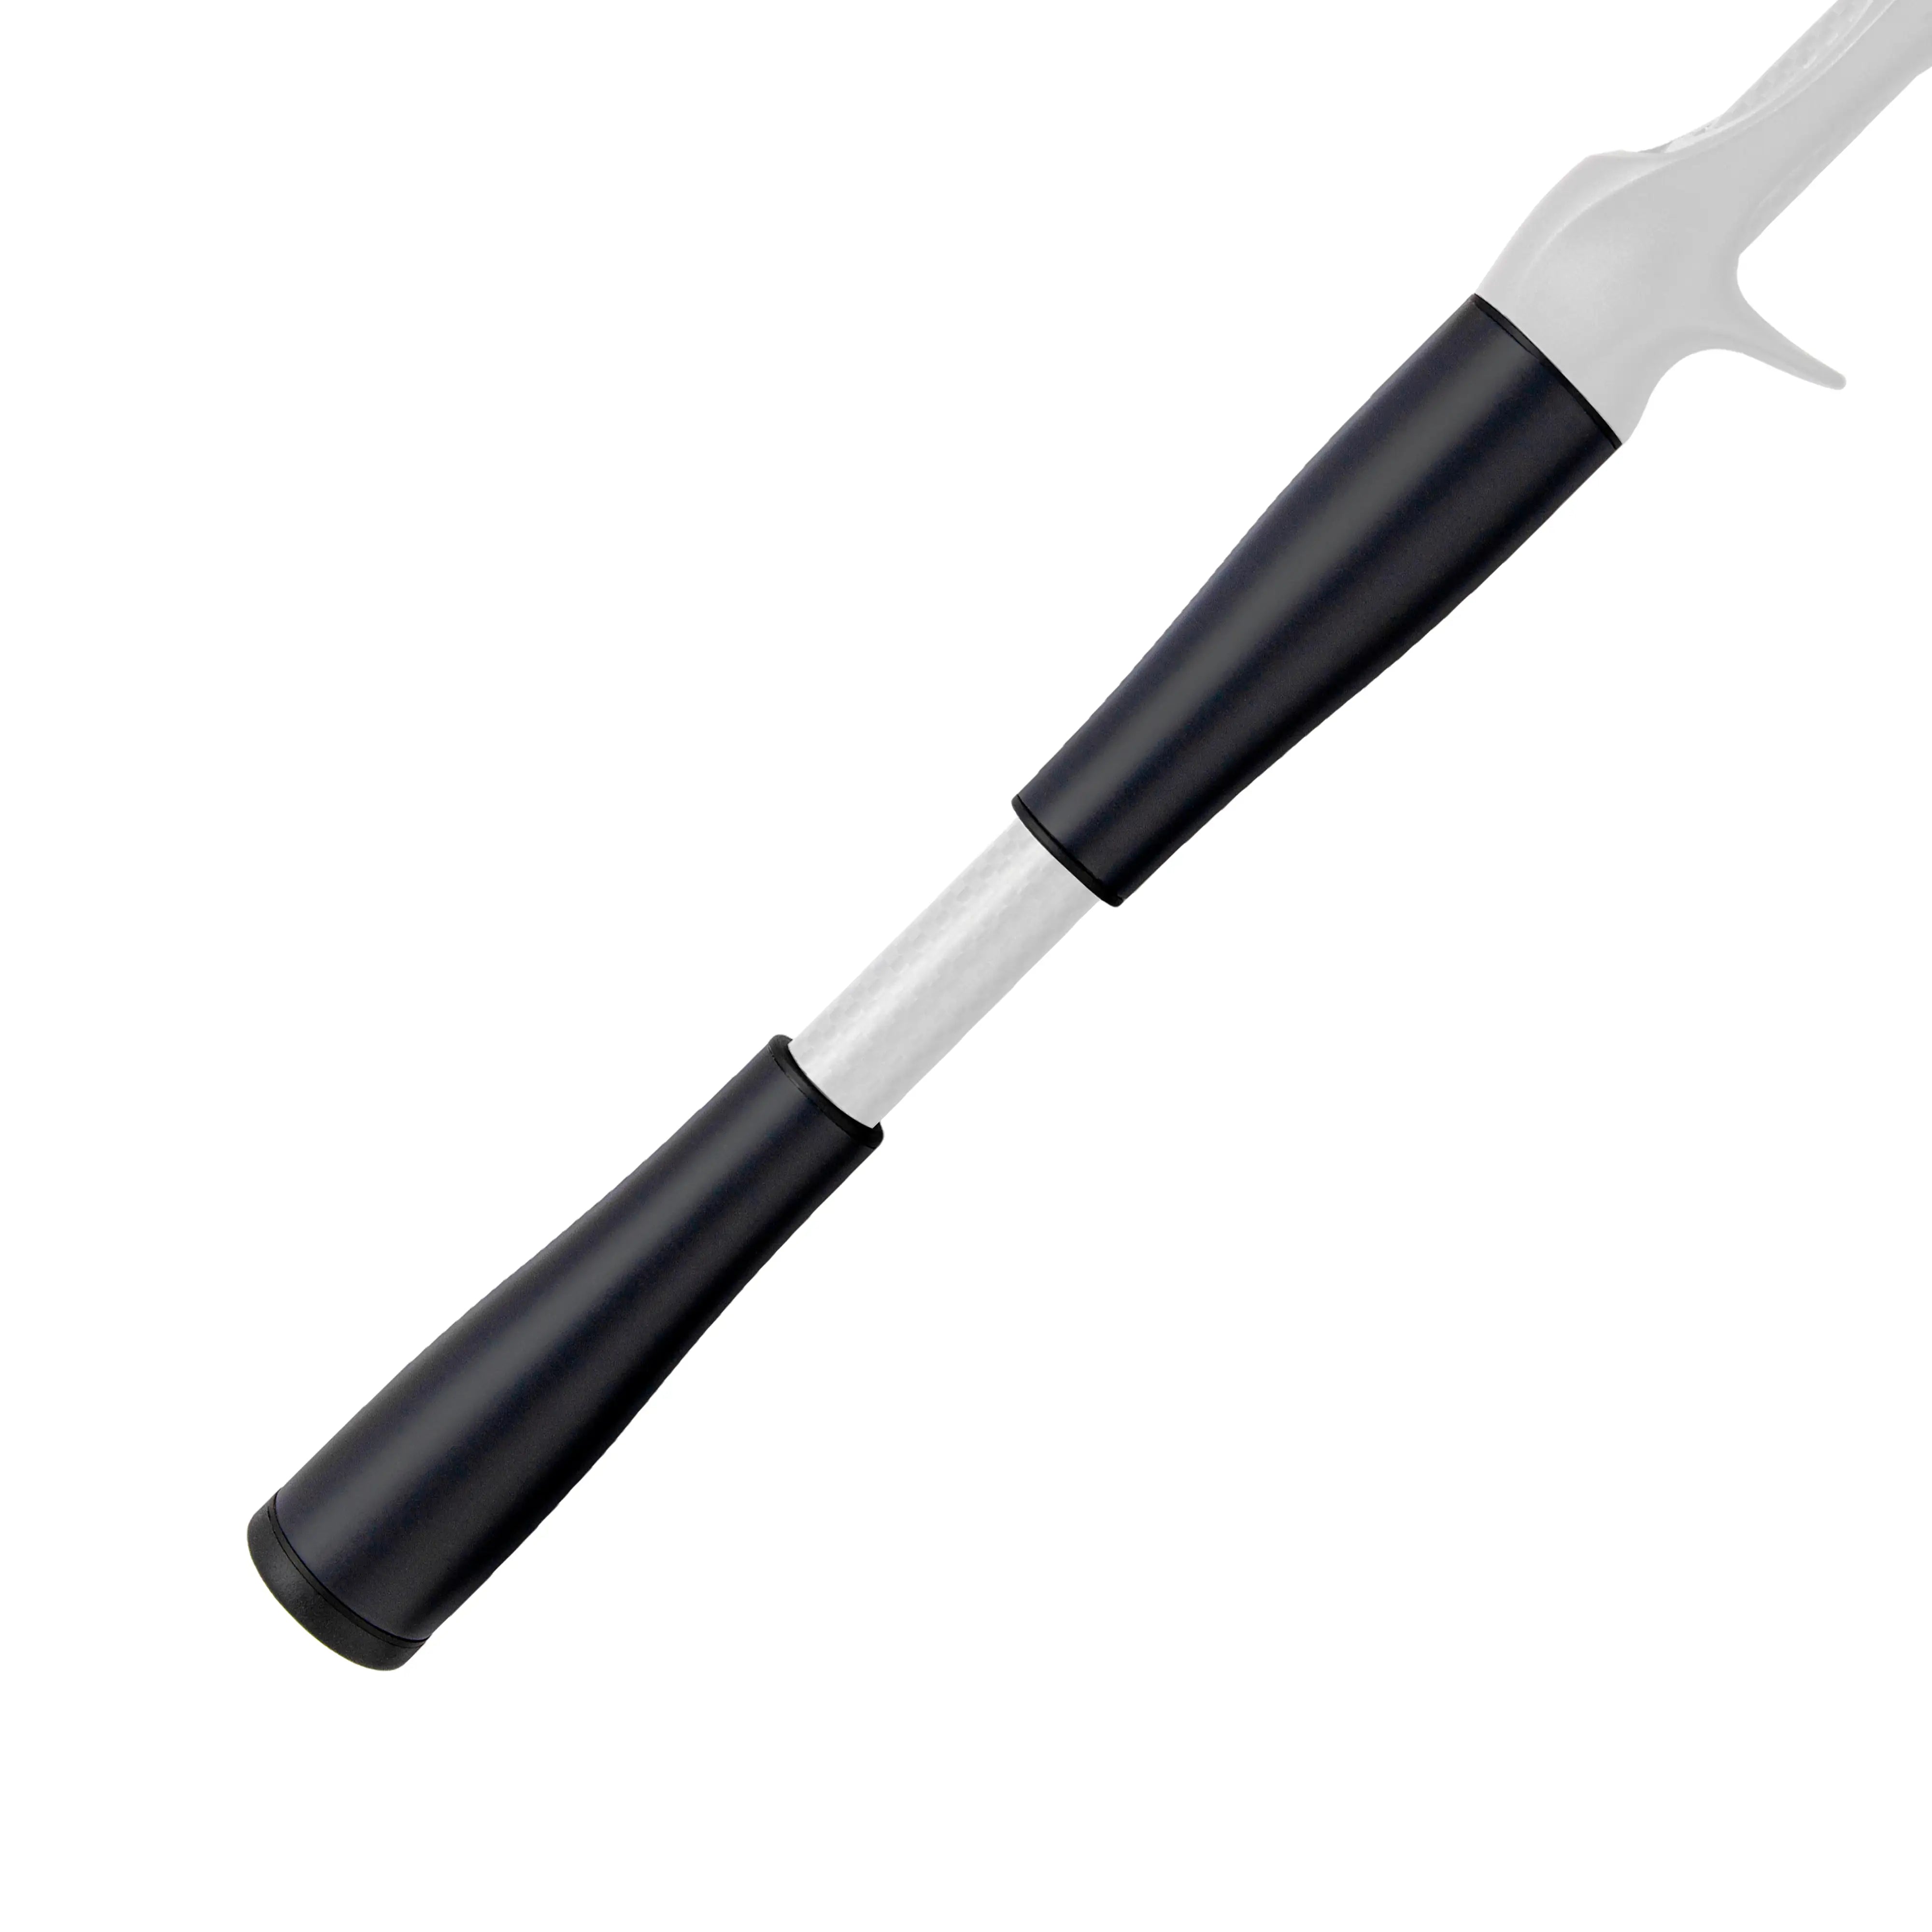 G2 Split Grip Carbon Handle Grip Kit for Casting Rods